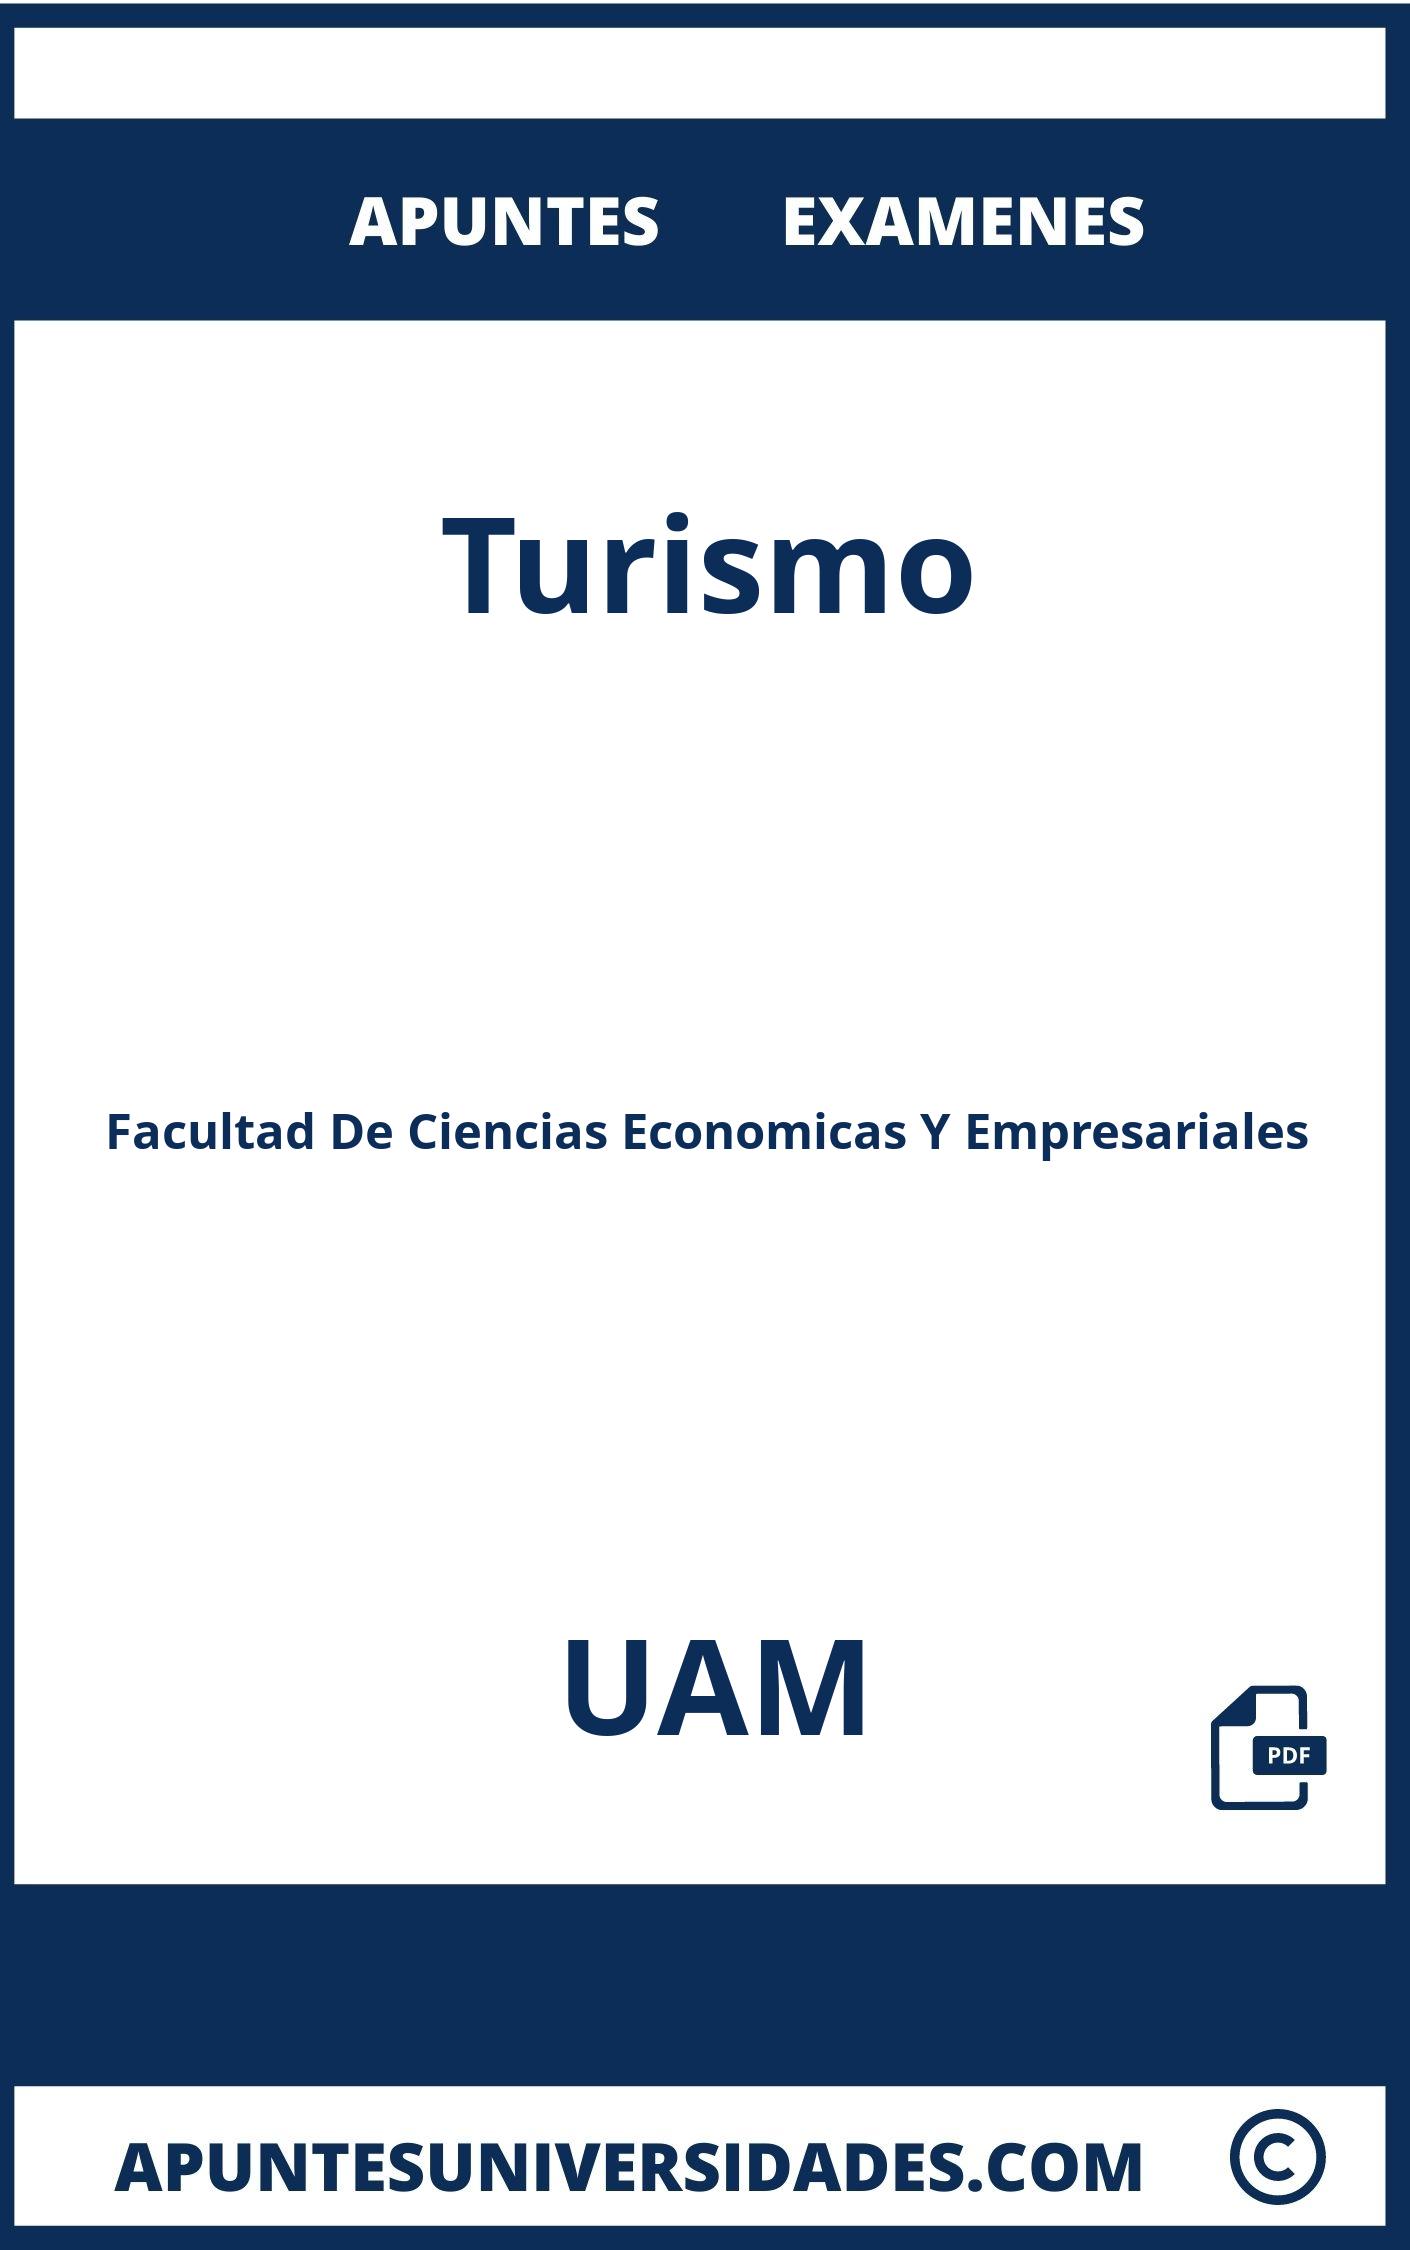 Examenes Turismo UAM y Apuntes